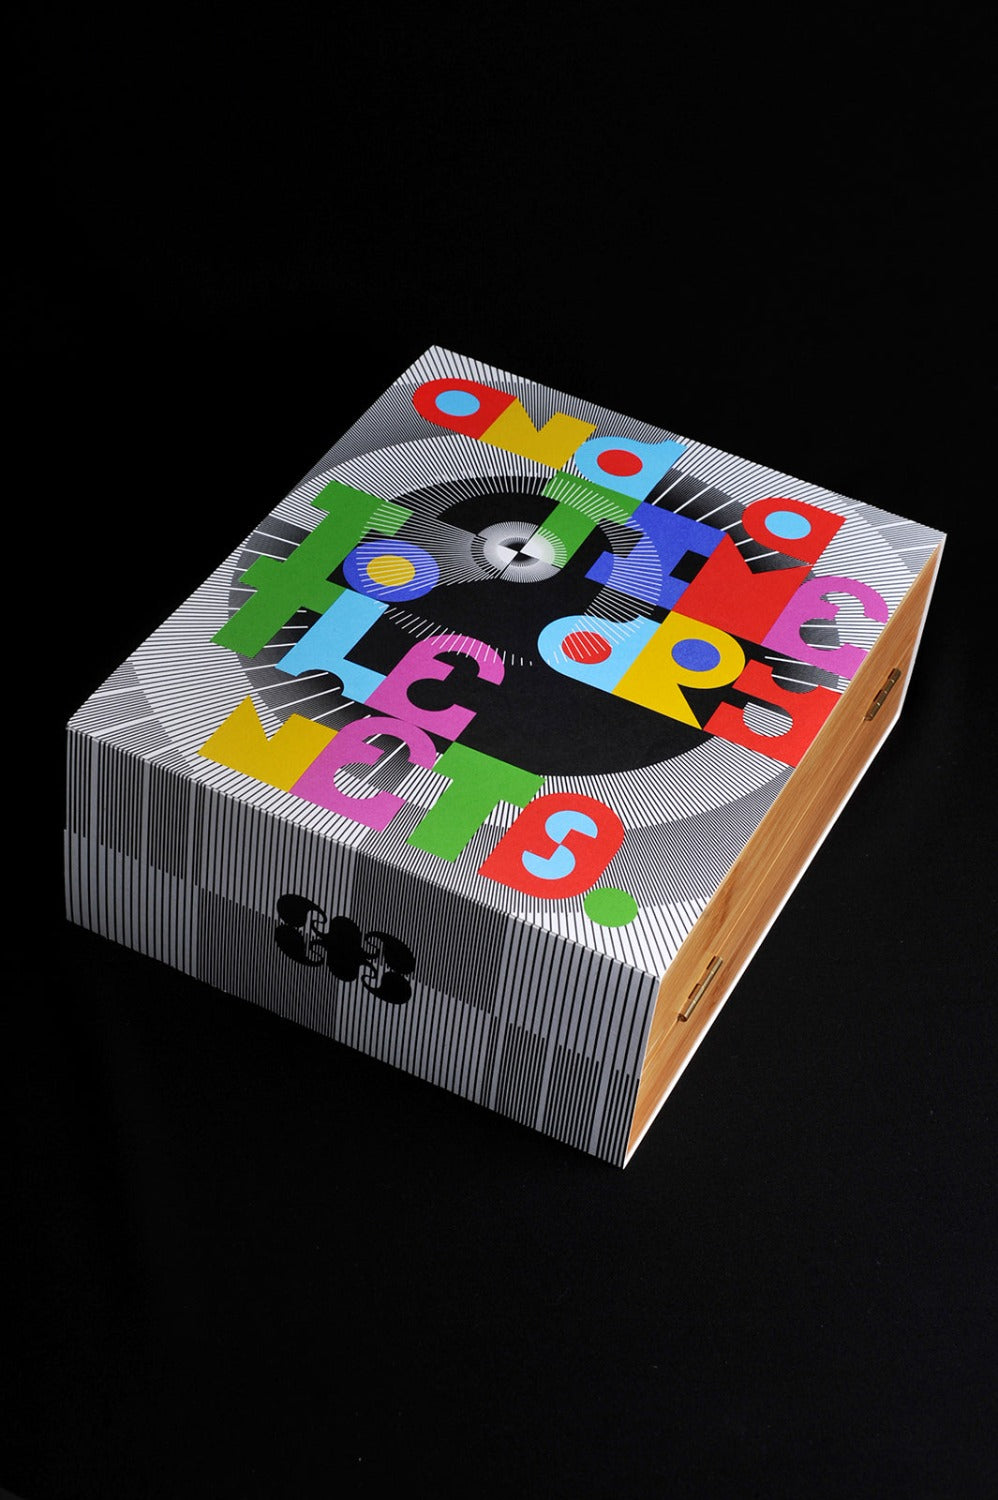 M/M Paris x Anicorn "2" colllection - “2Gether” Ping Pong Set, box set